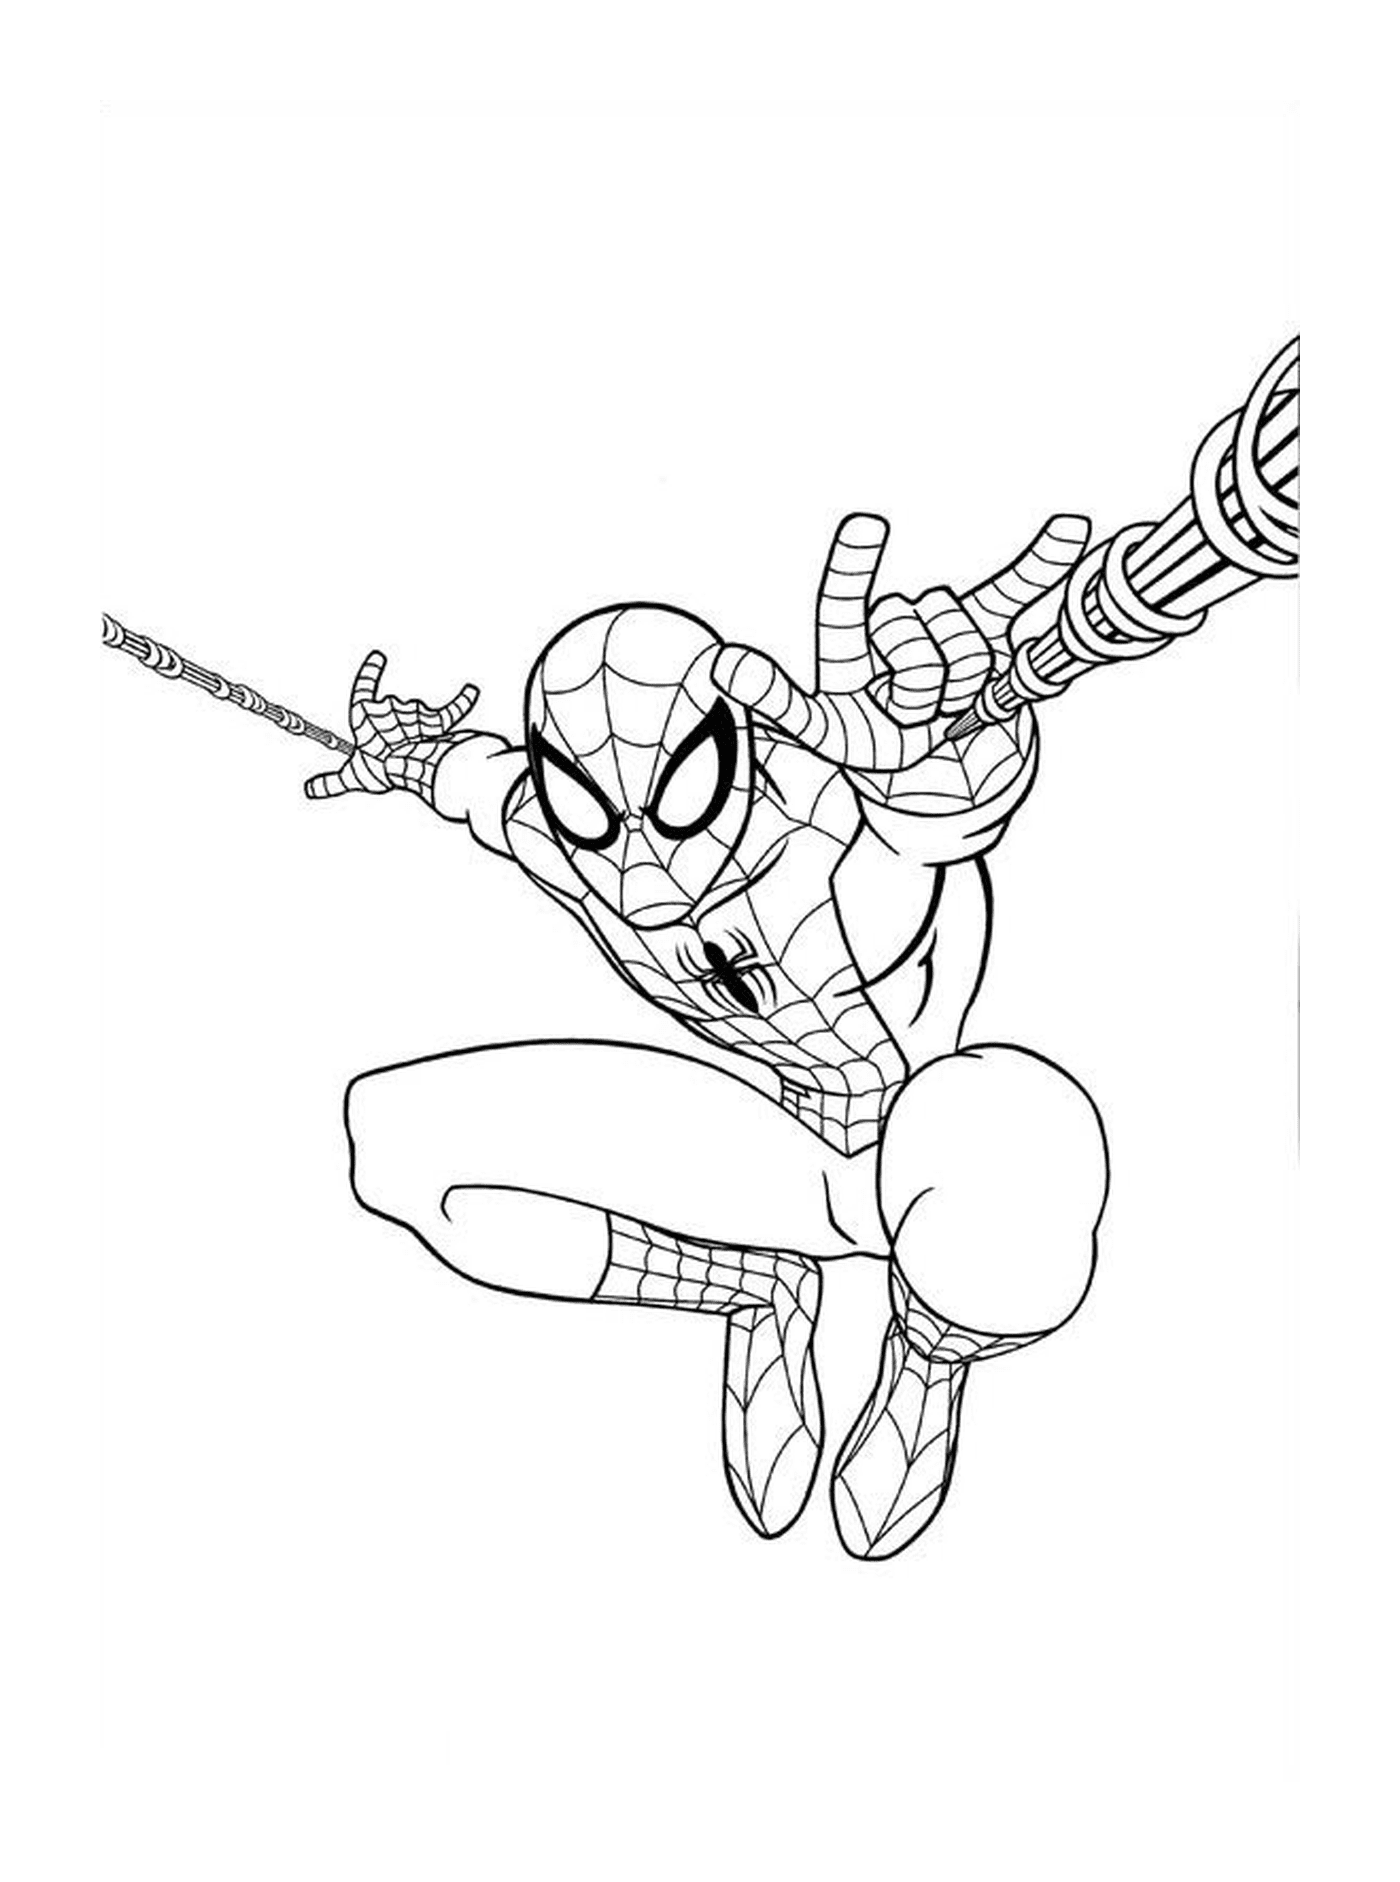  Spiderman saltando 